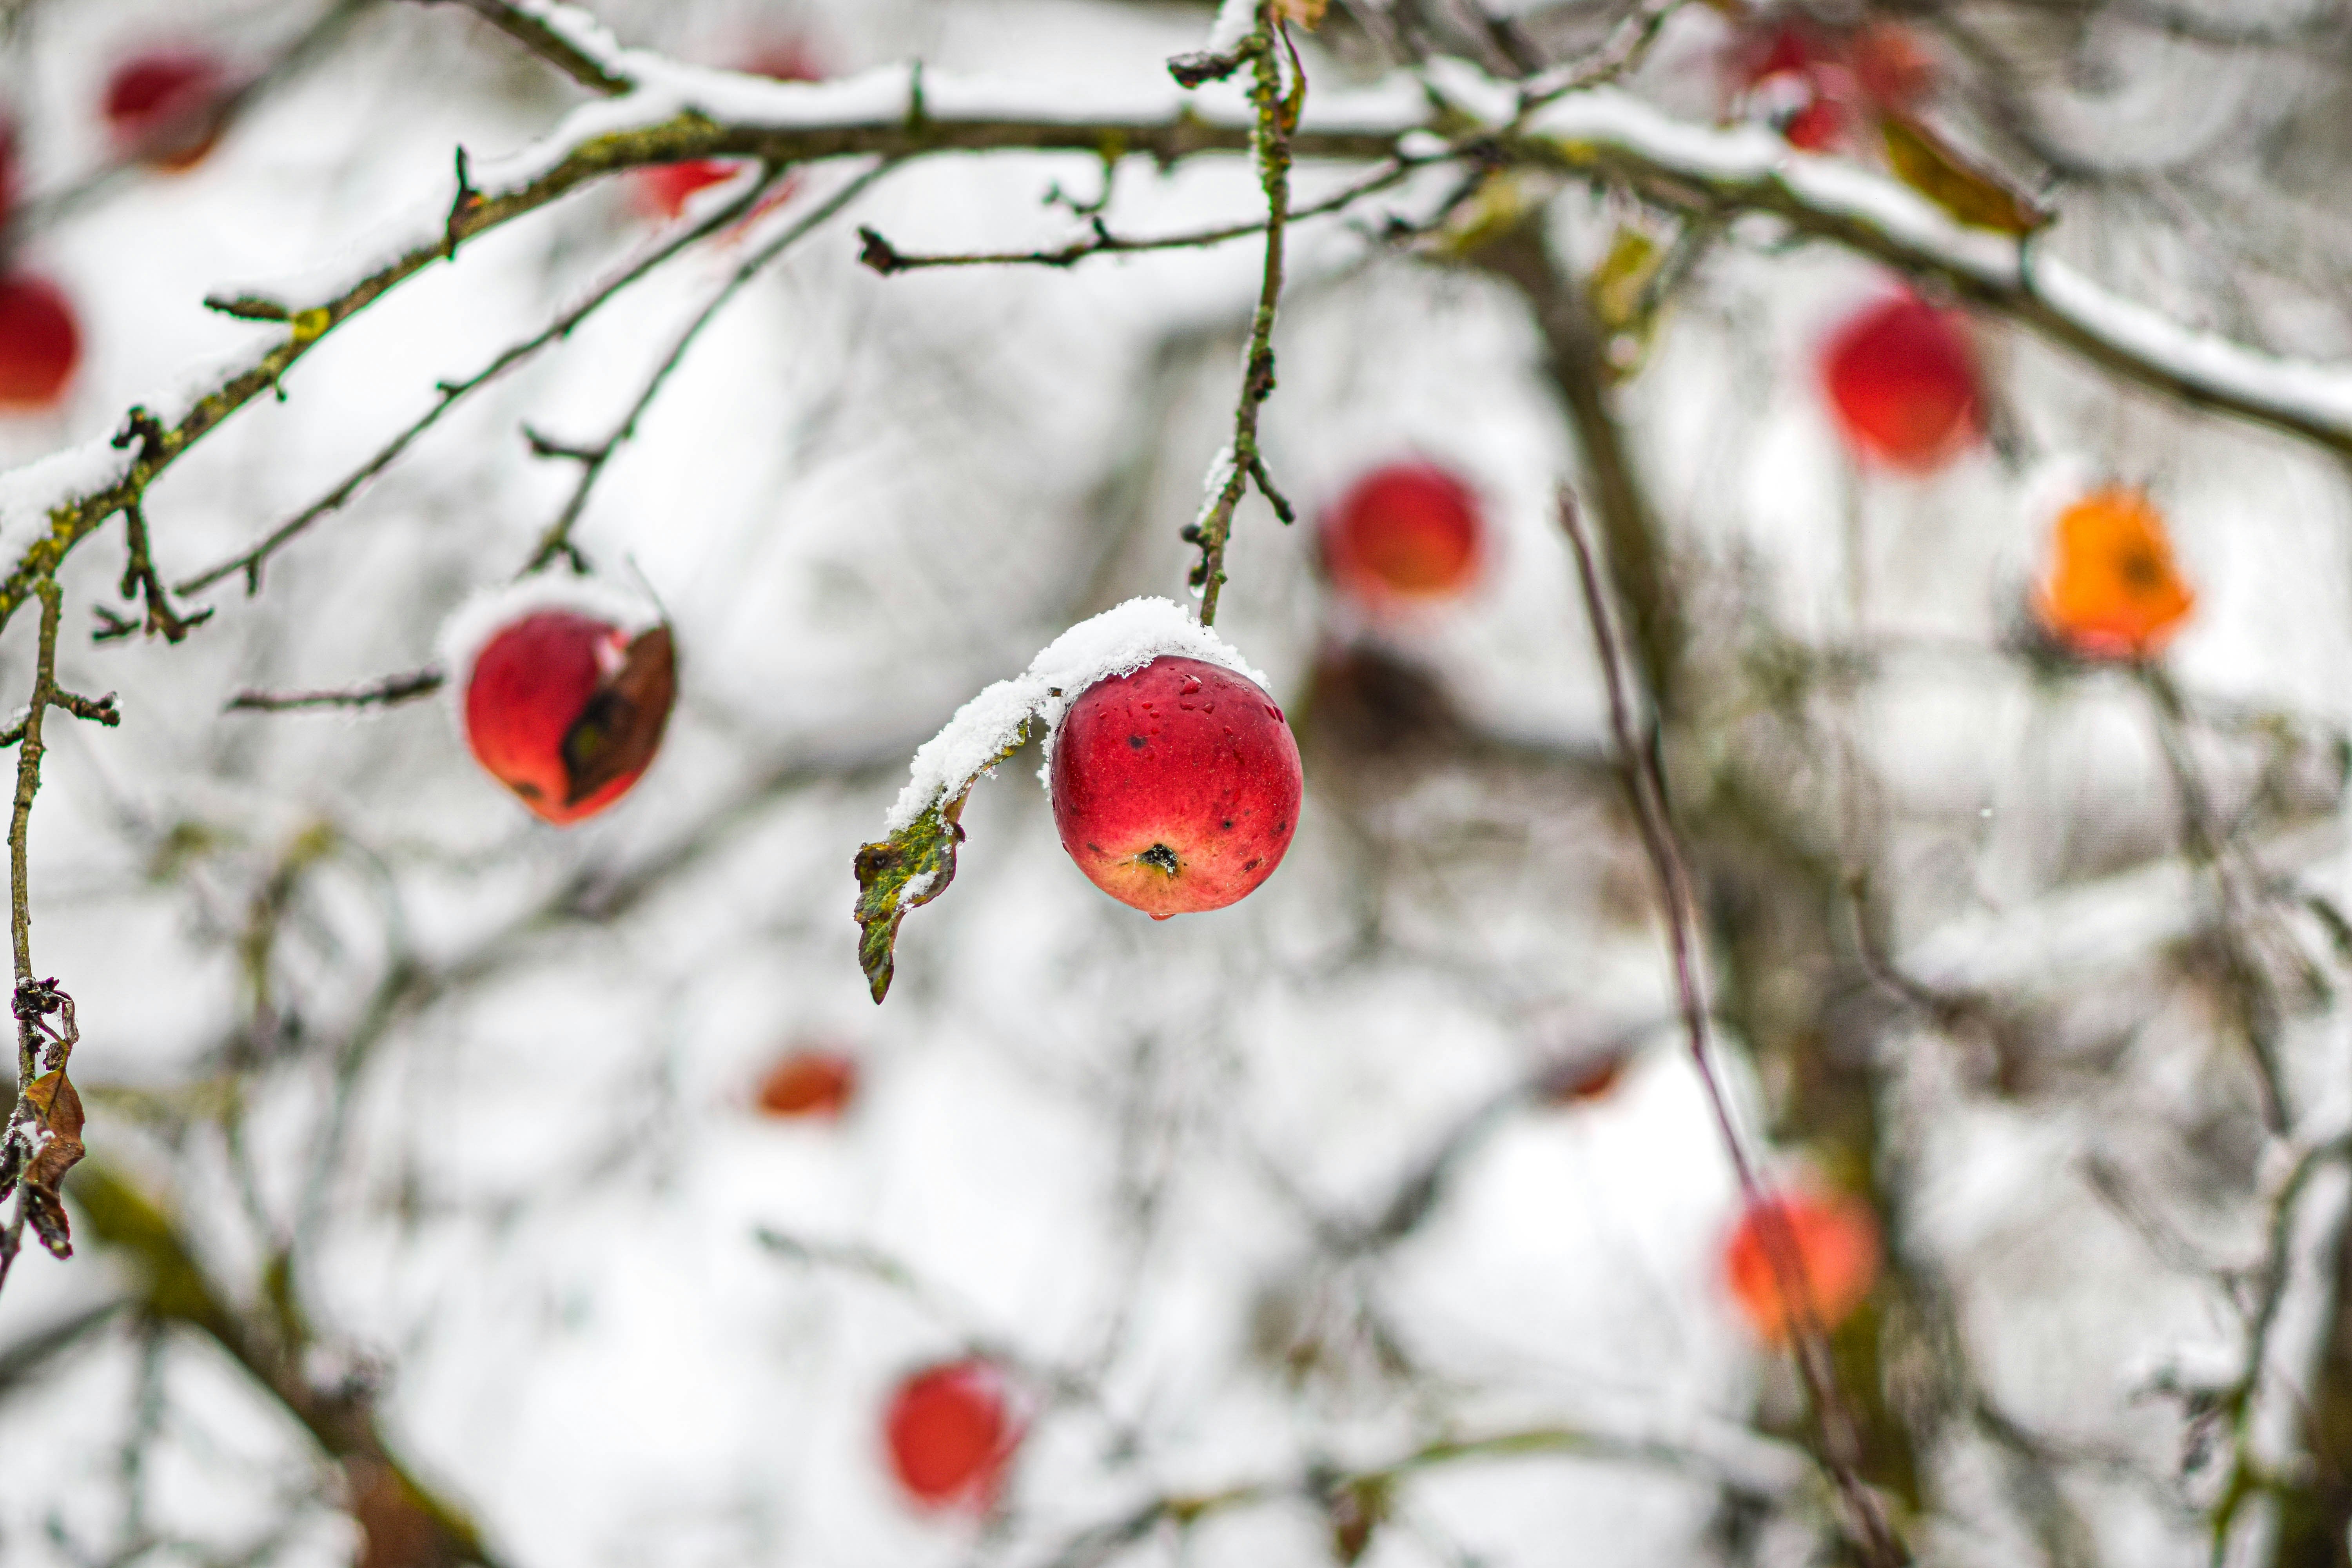 Snow on hanging apples 🍎❄️